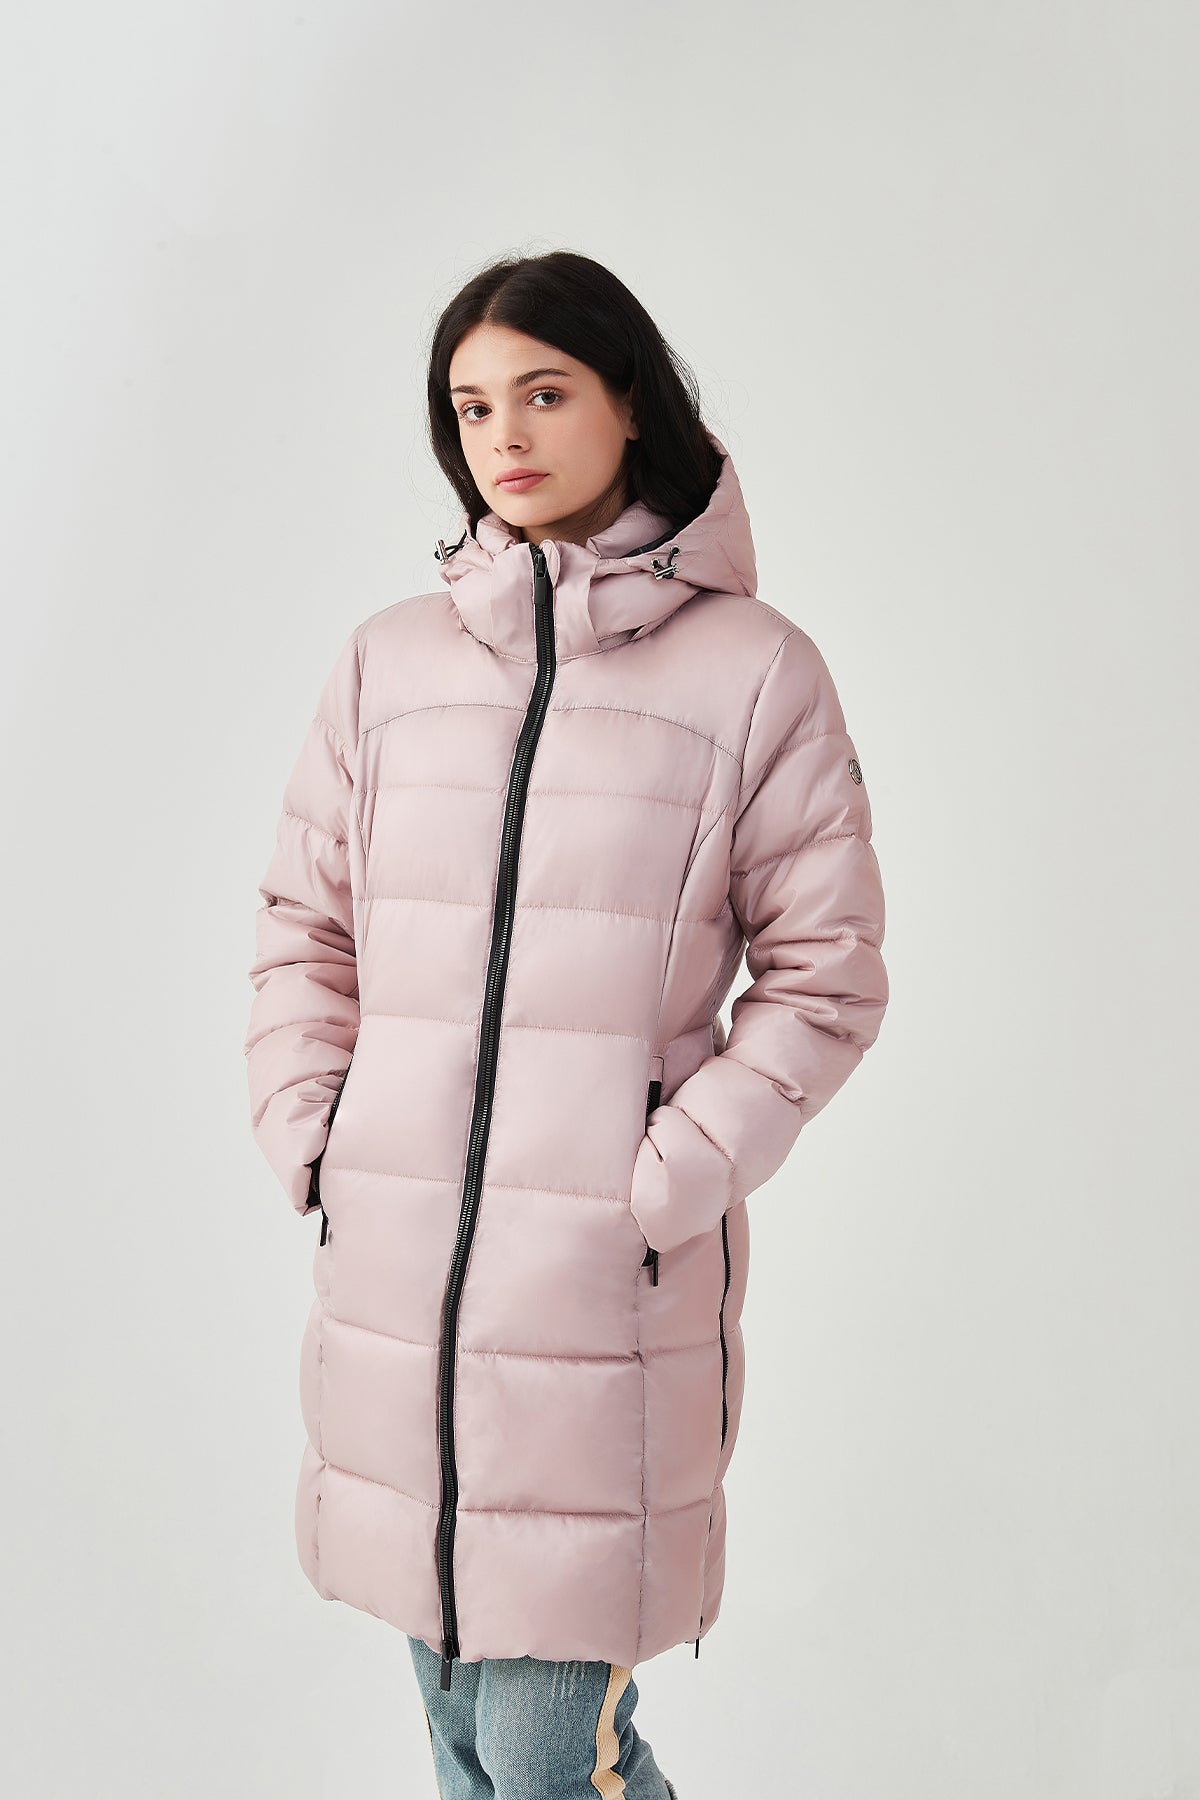 Shiny Lightweight Winter Jacket with hood